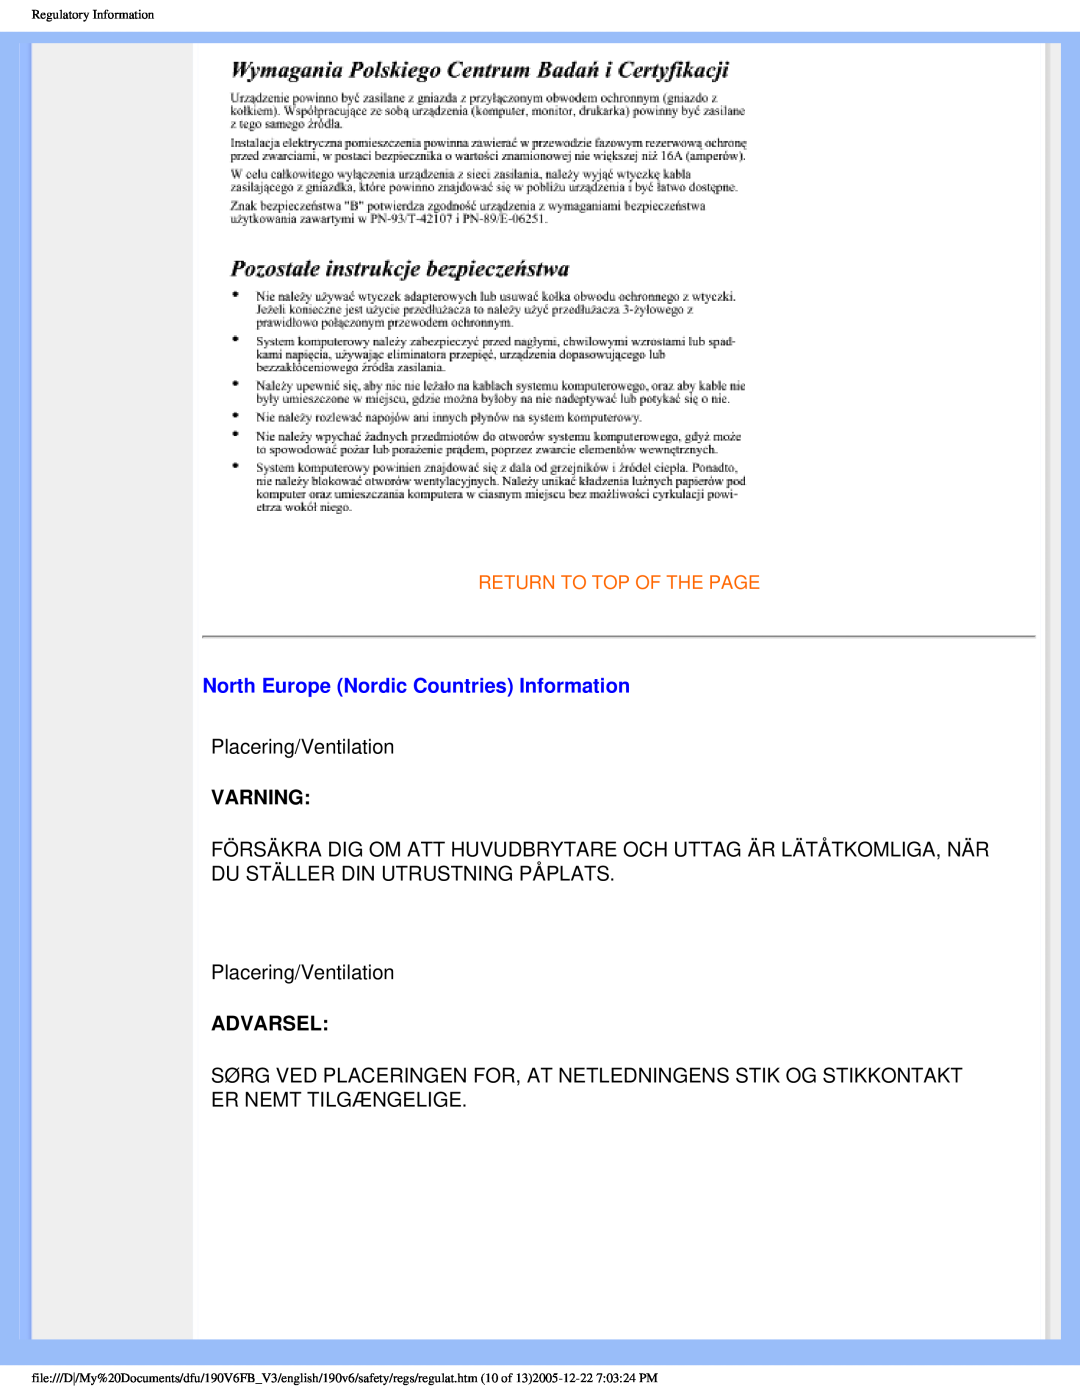 Philips 190V6FB user manual North Europe Nordic Countries Information, Varning, Advarsel 